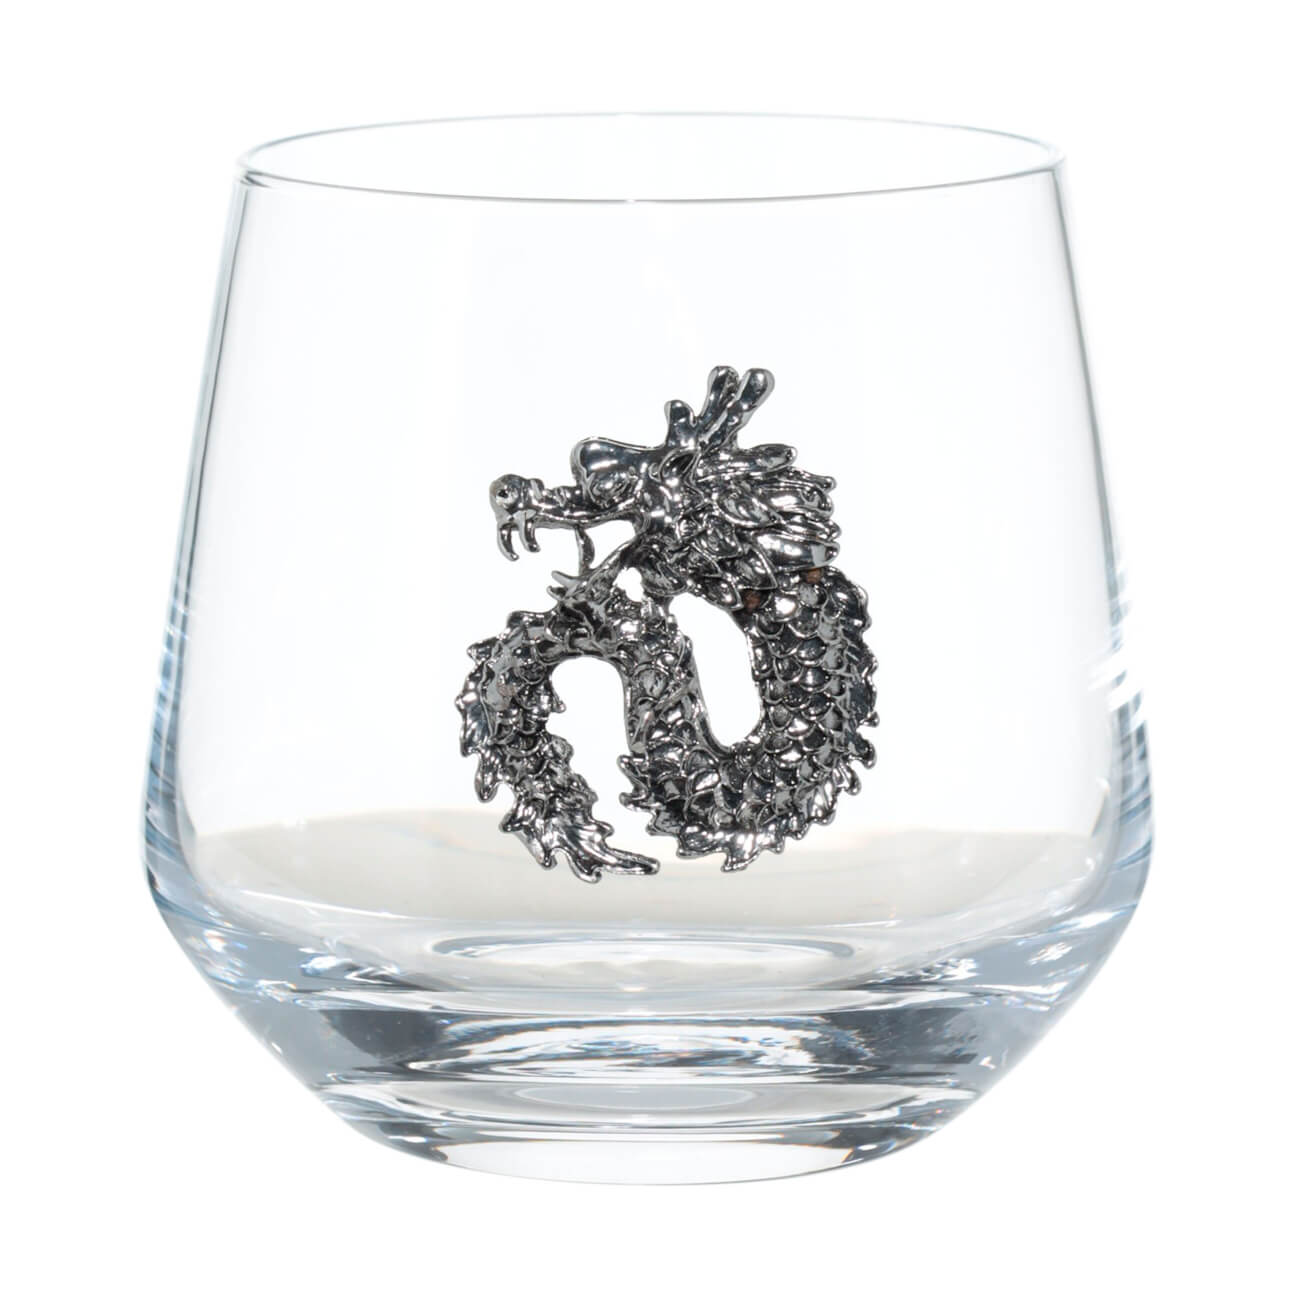 Стакан для виски, 370 мл, стекло/металл, Серебристый дракон, Lux elements бокал для виски 320 мл стекло 6 шт bohemia amundsen ardea 2se45 320